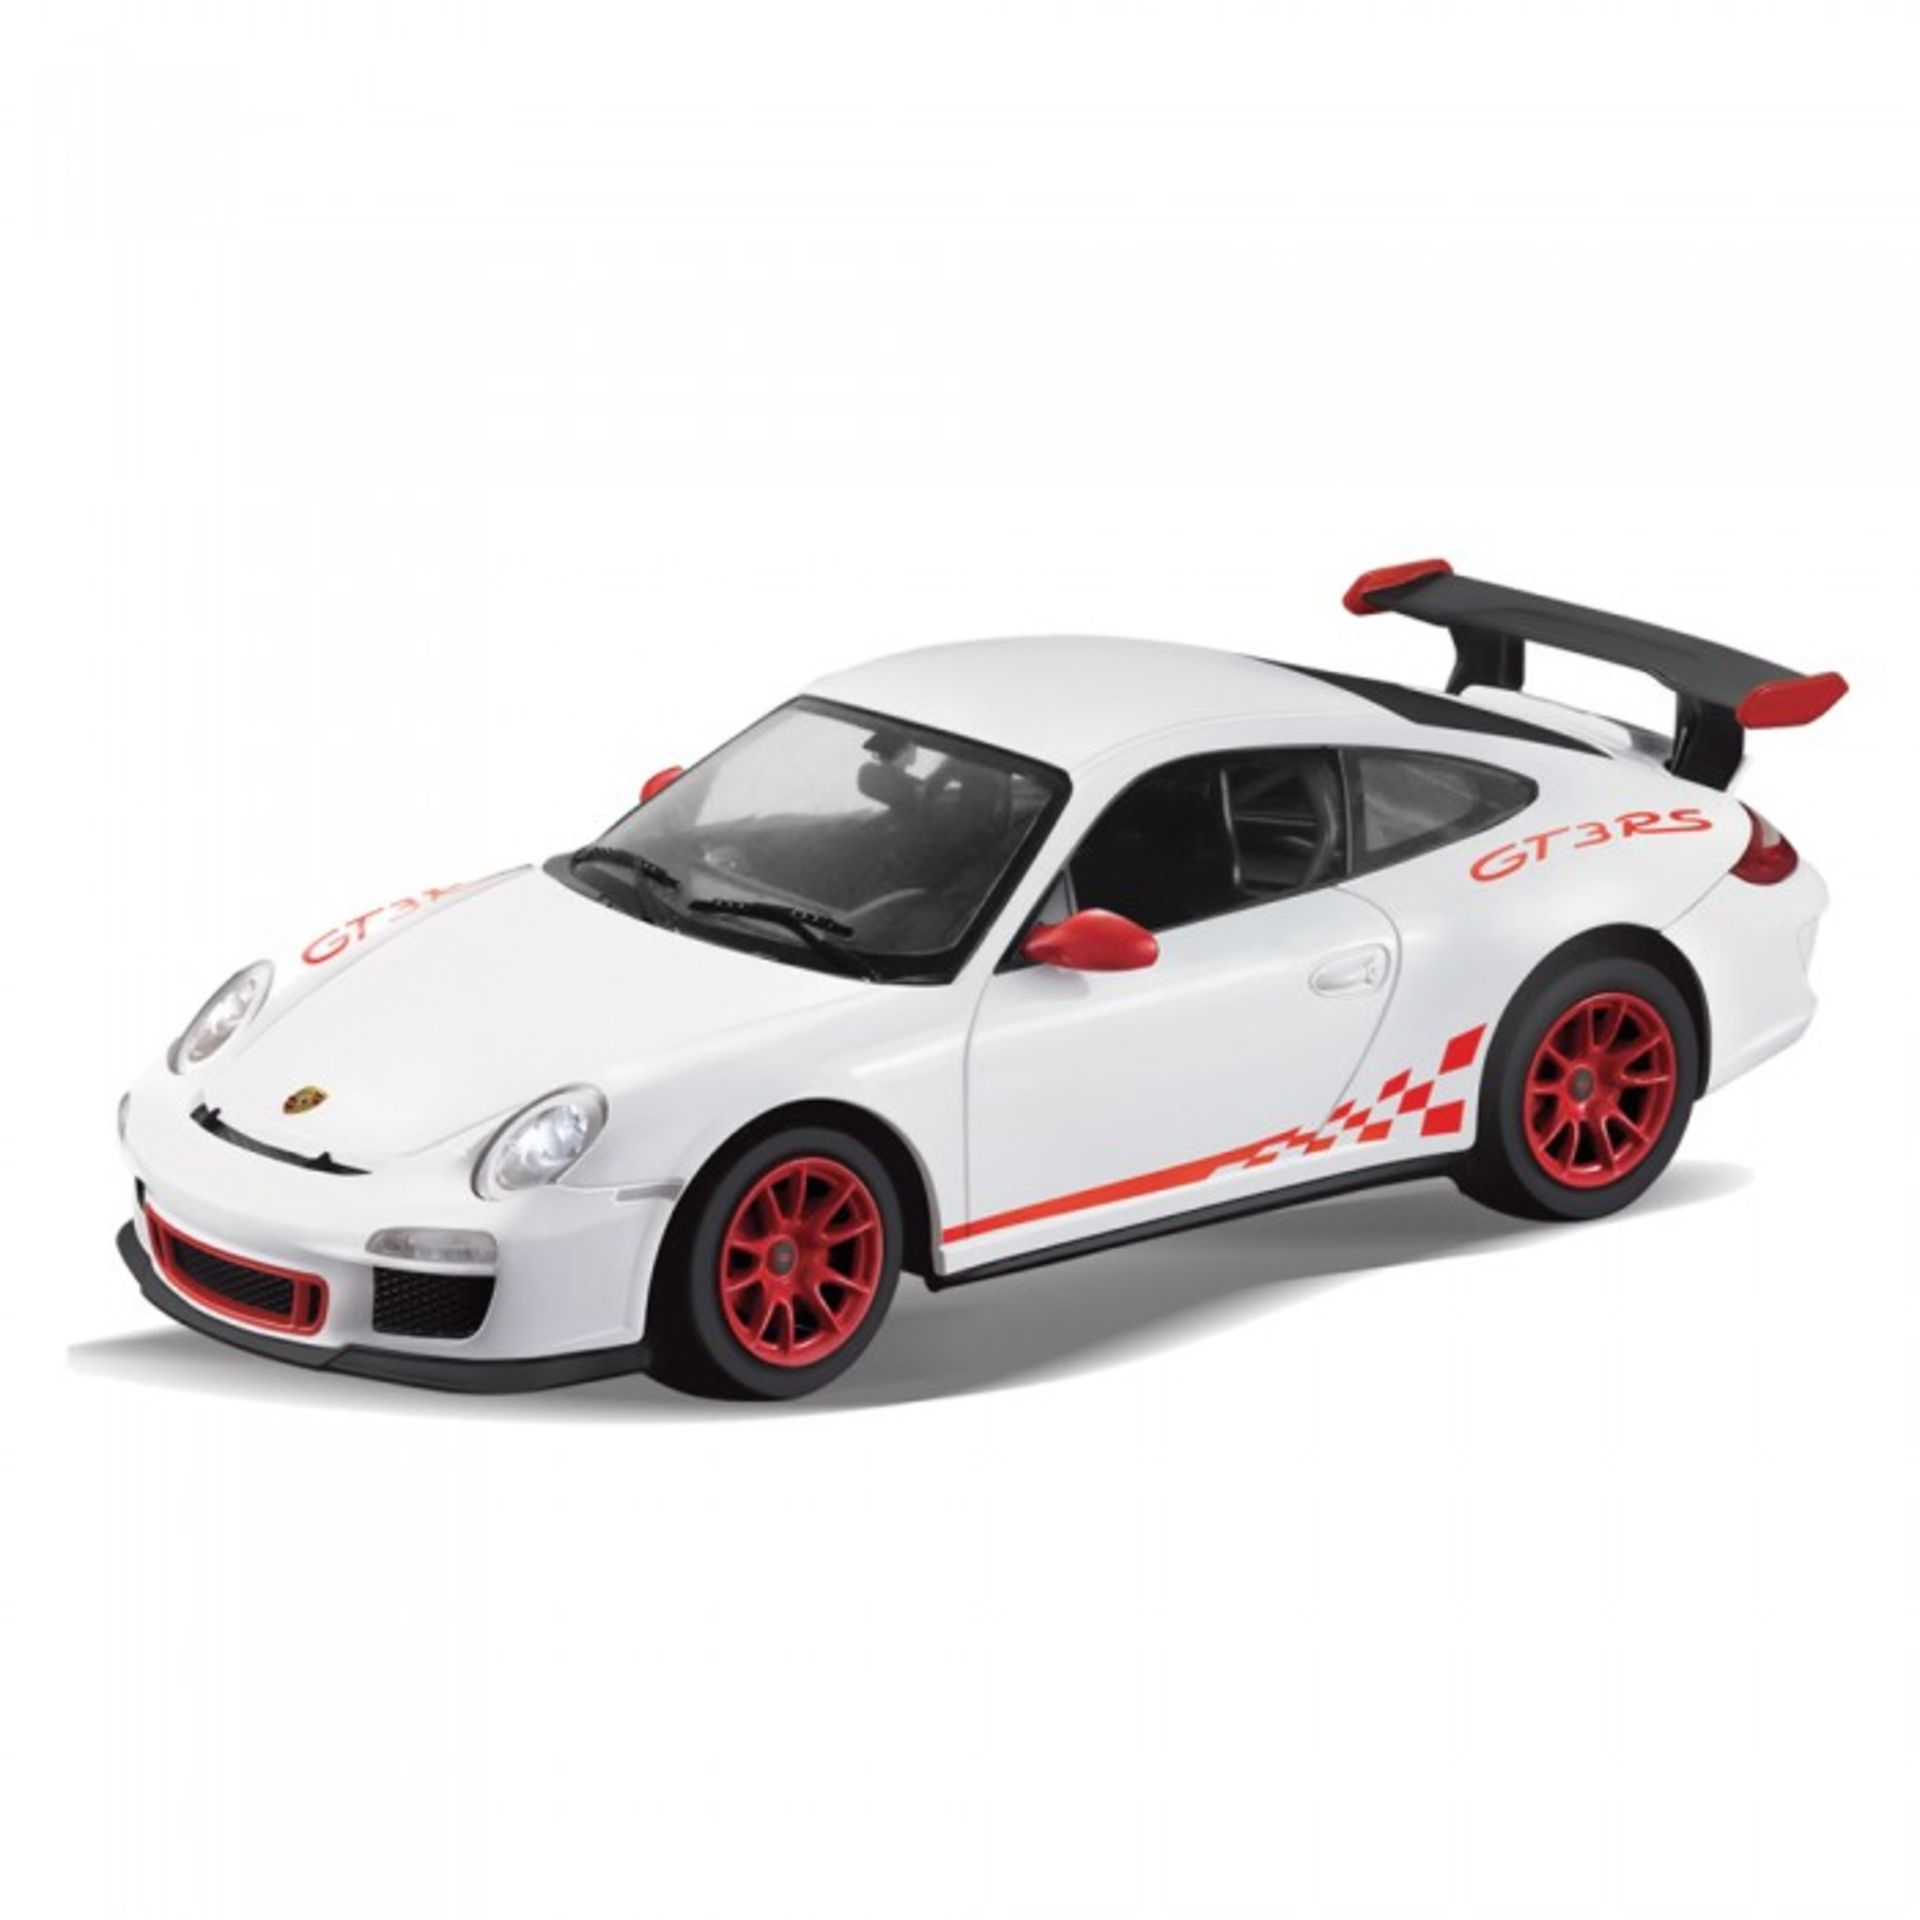 V 1:14 Remote Control Porsche 911 GT3 RS RRP £69.99 - Image 2 of 2